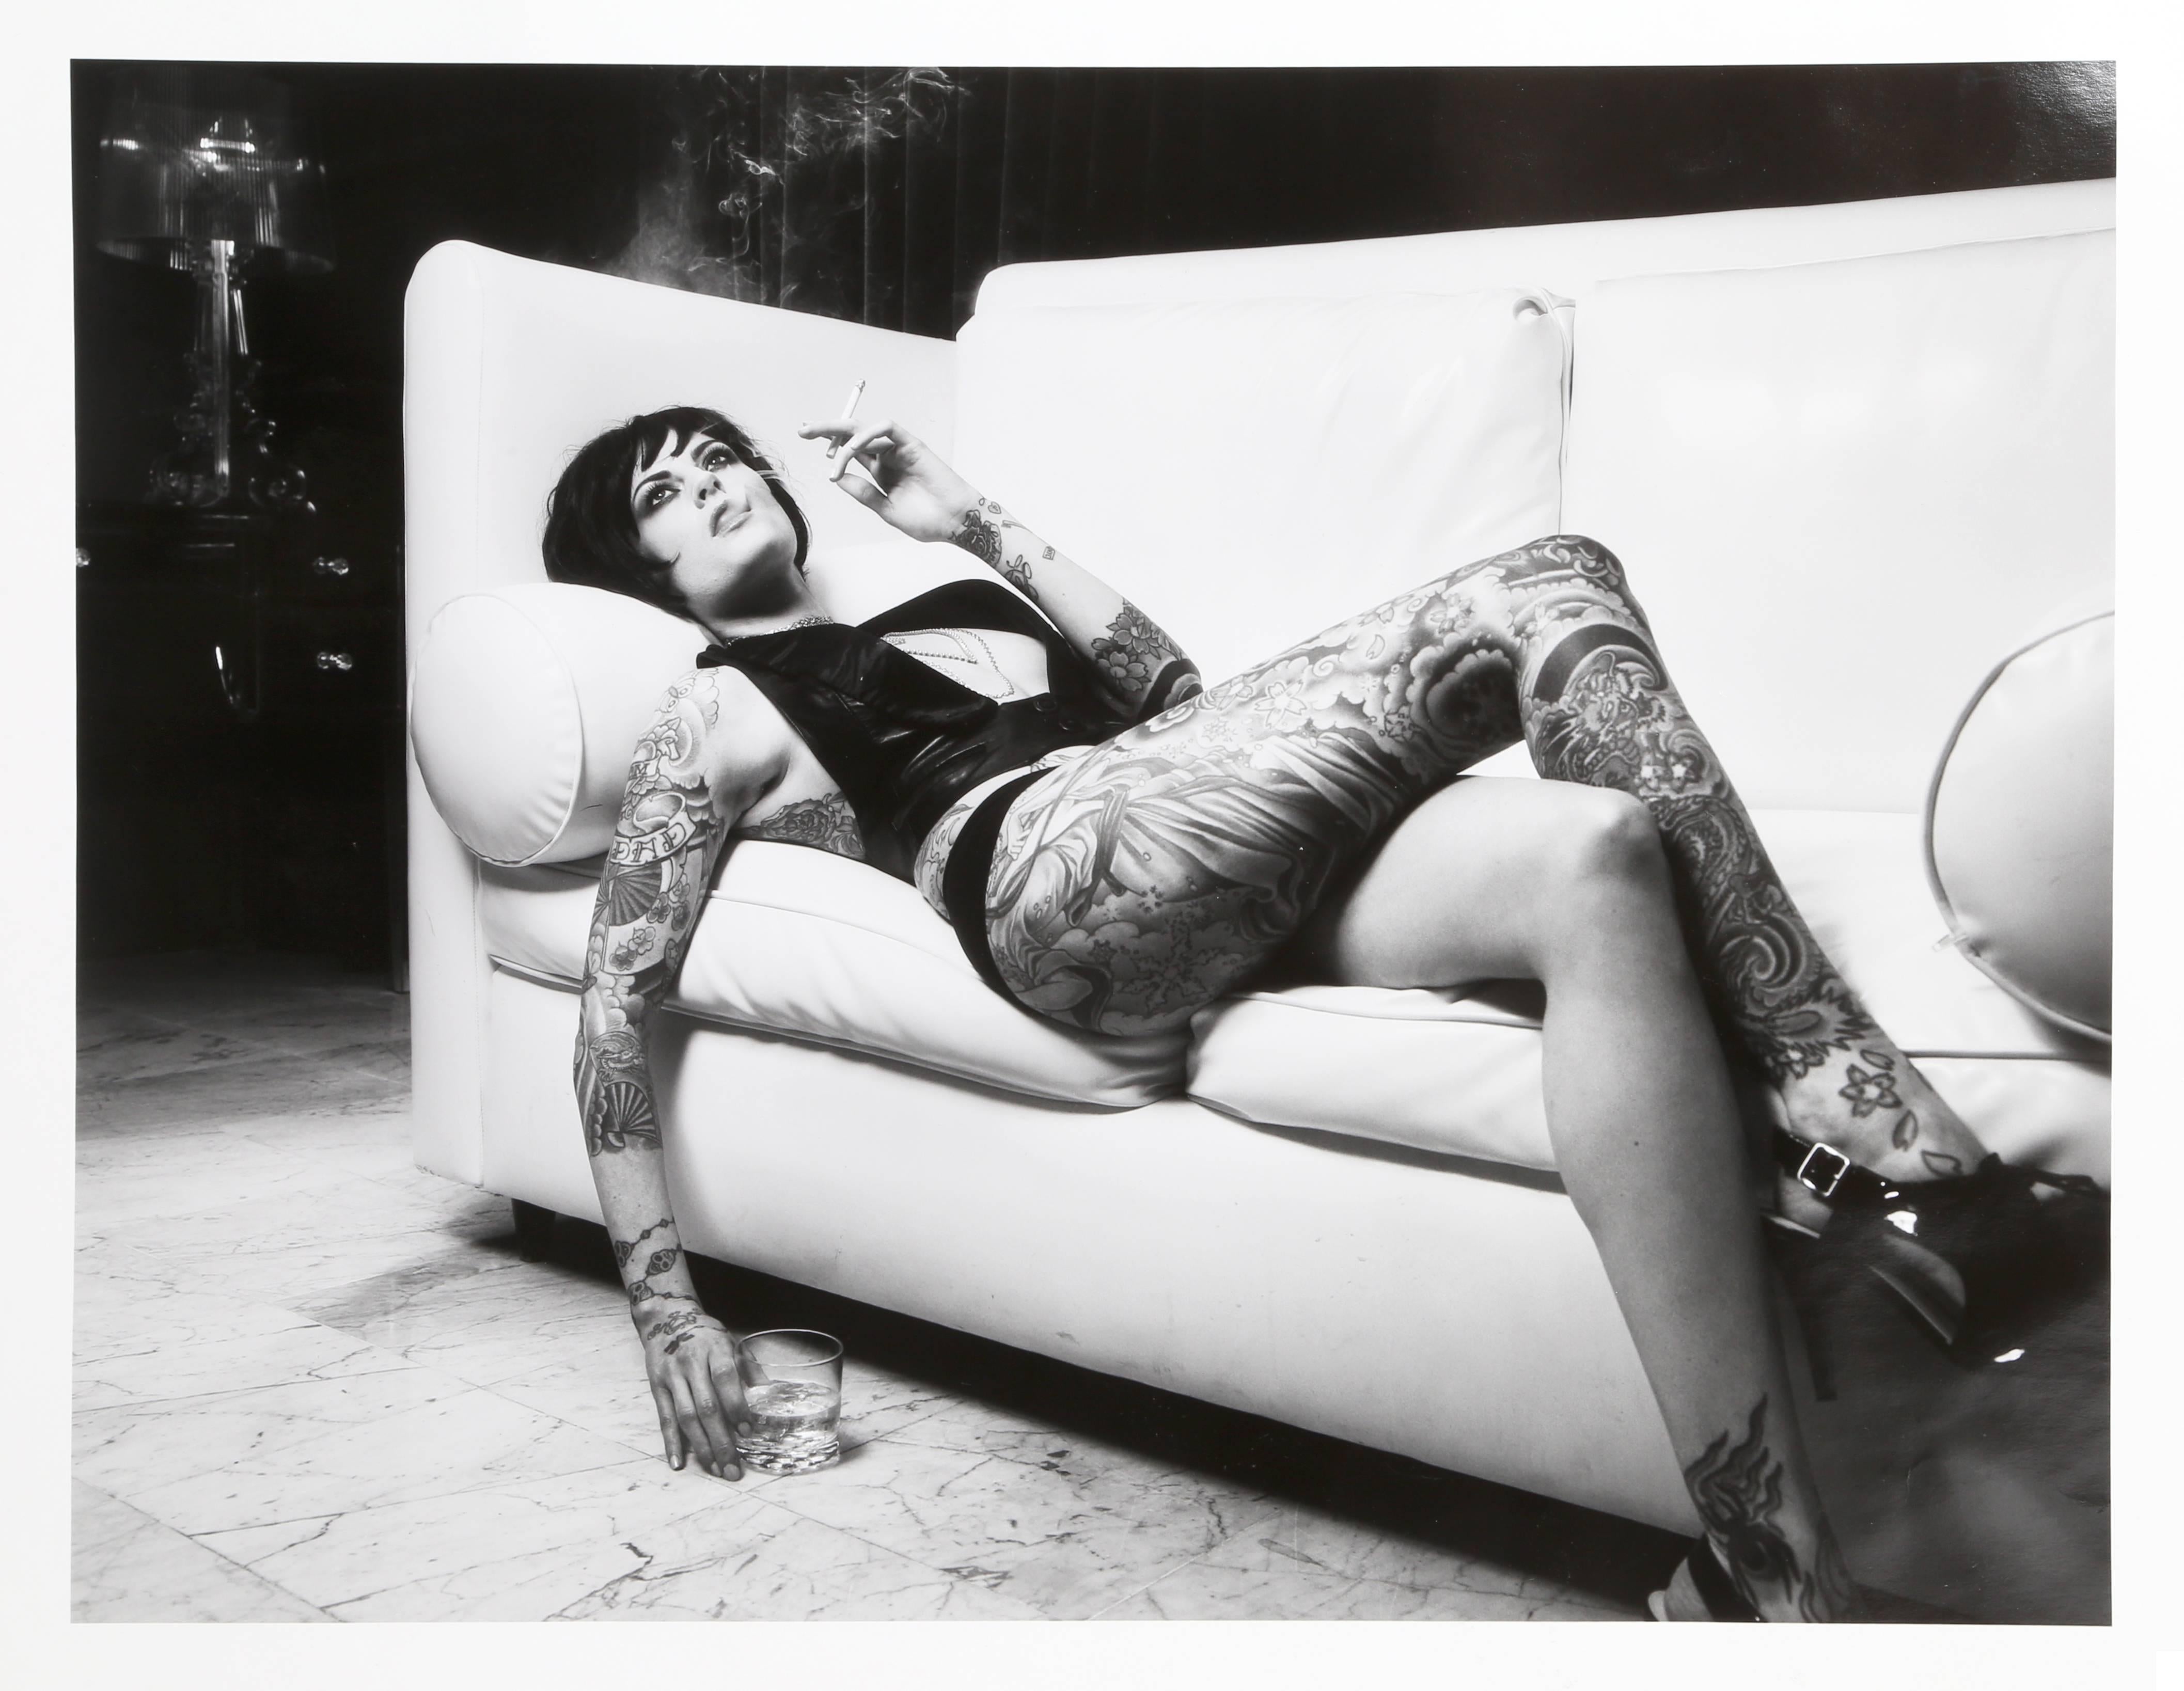 Warwick Saint Black and White Photograph - Smoking Woman with Tattoos